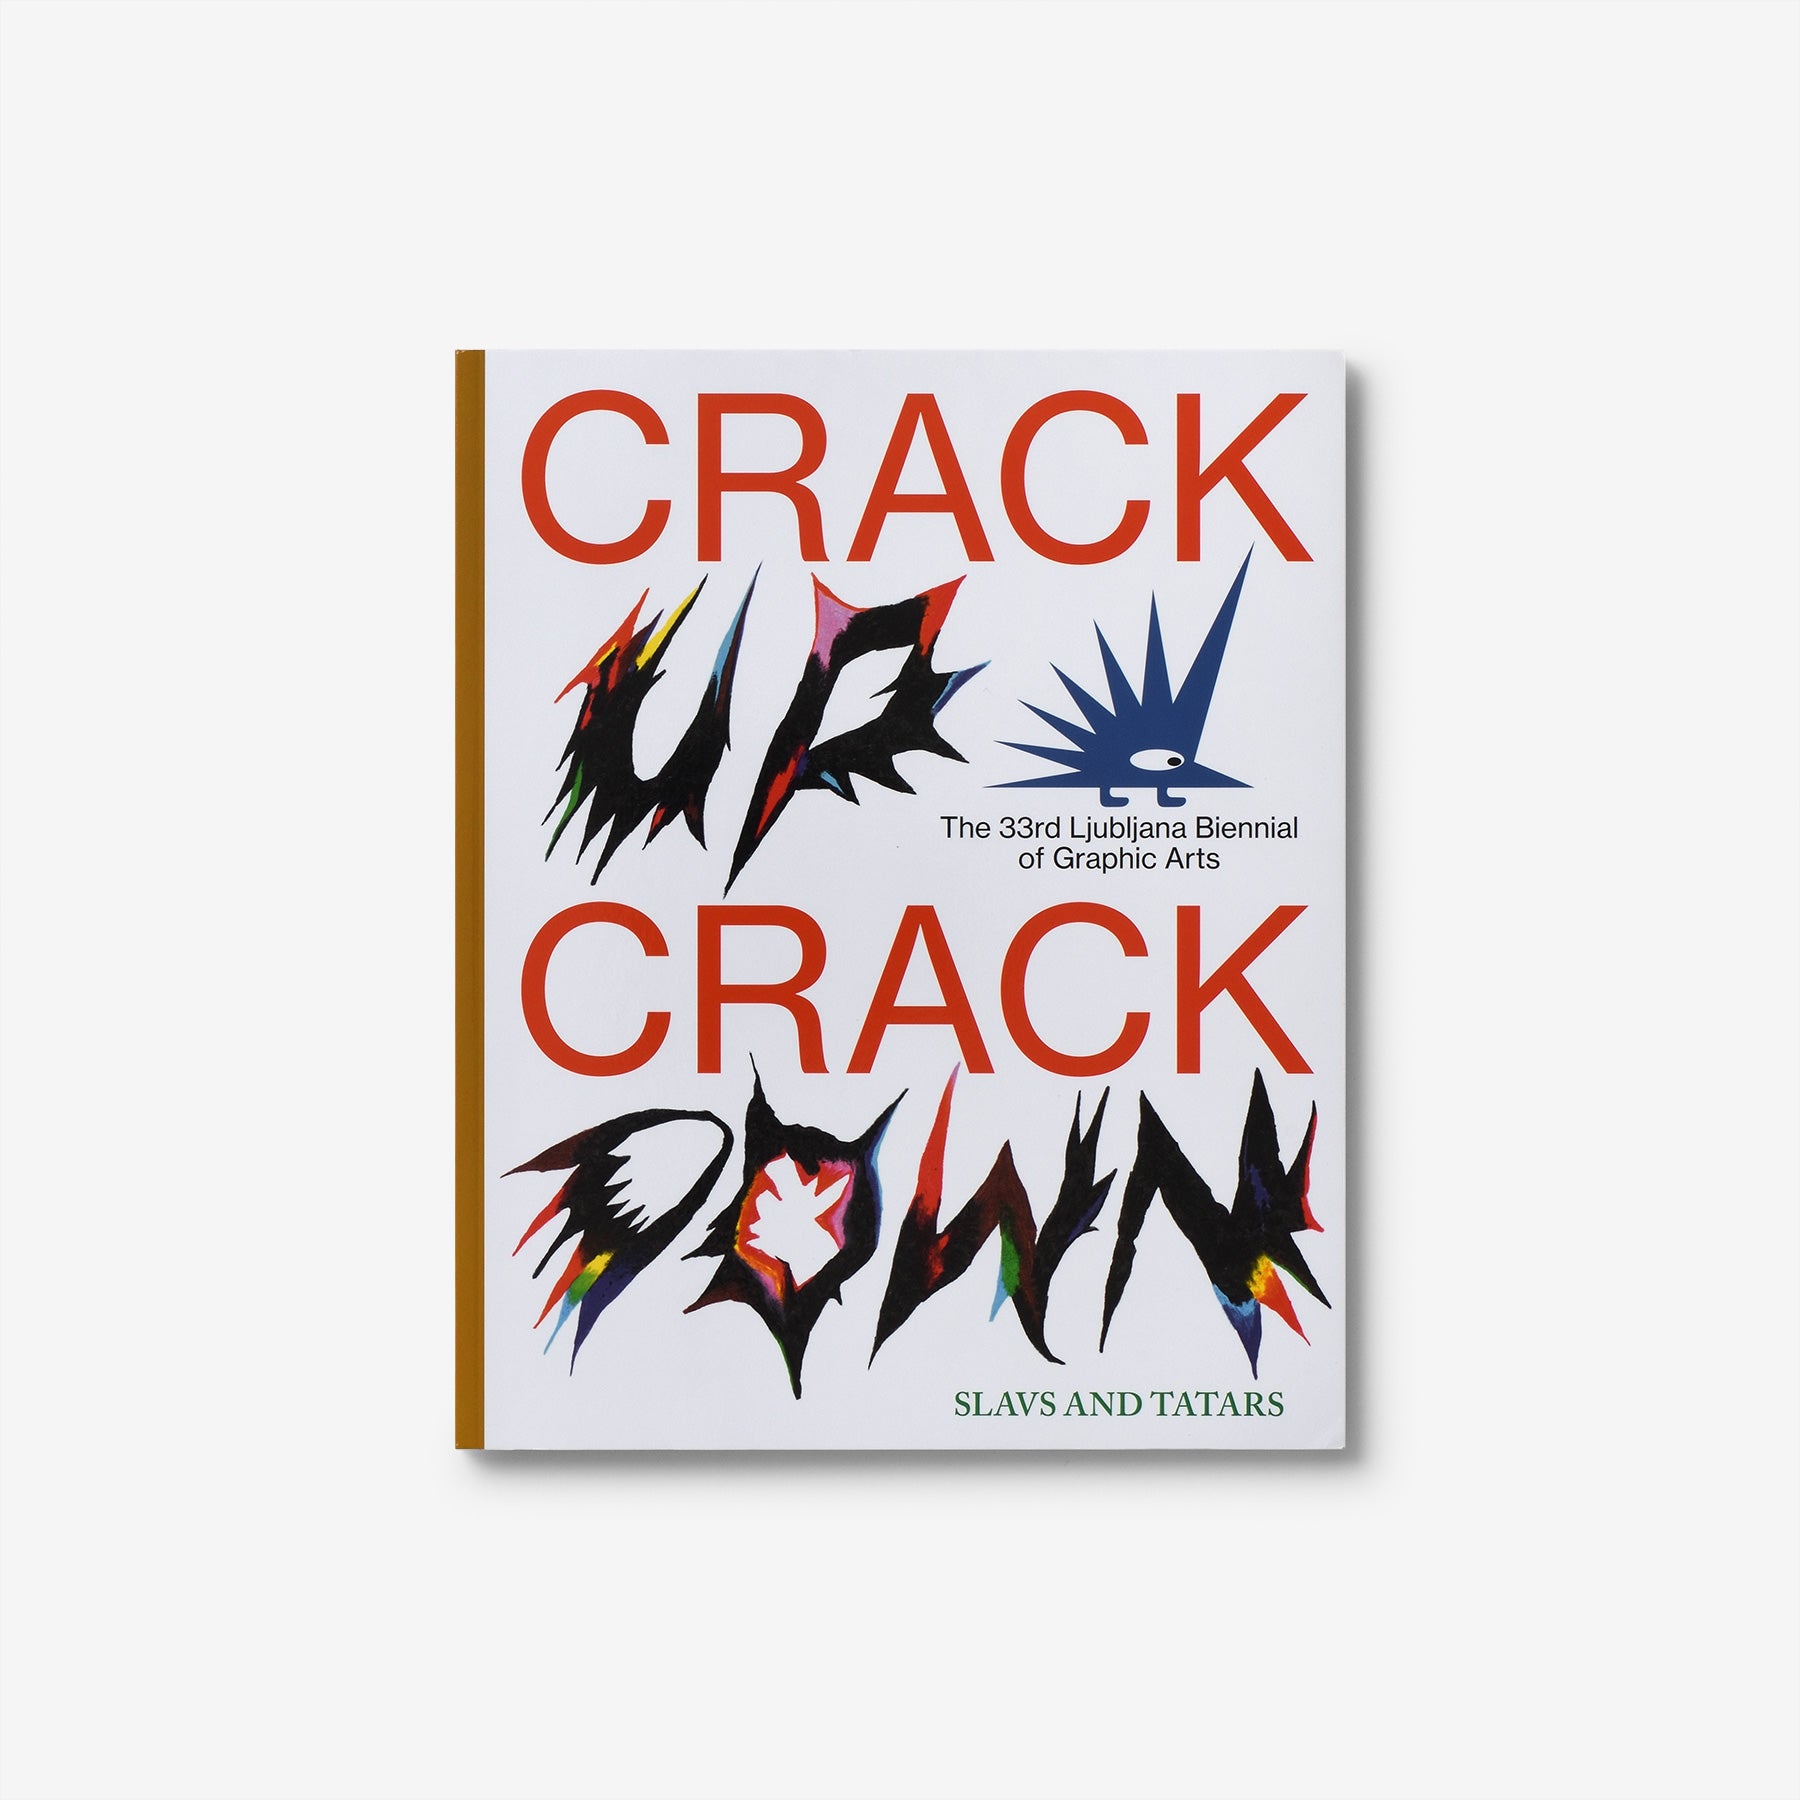 Crack Up – Crack Down. The 33rd Ljubljana Biennial of Graphic Arts